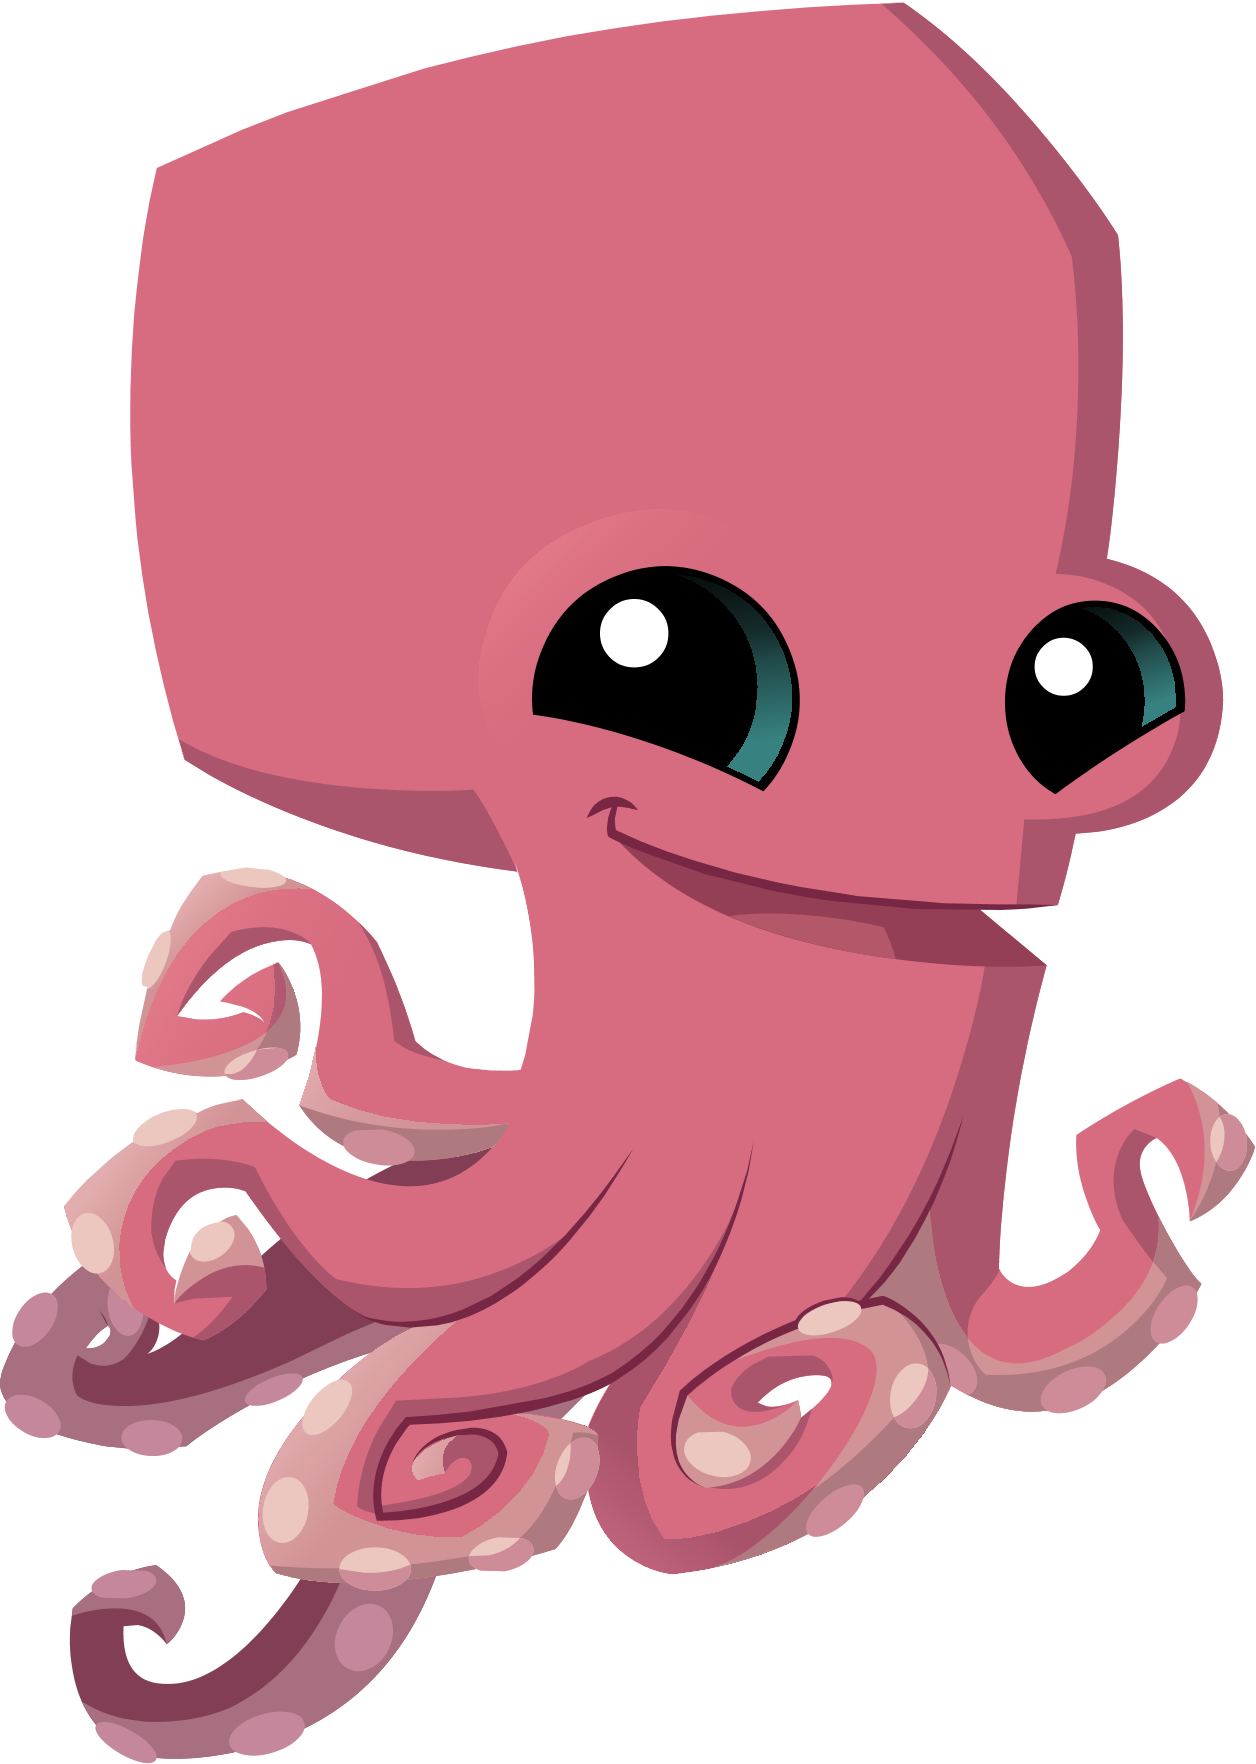 Octopus transparente imagens PNG